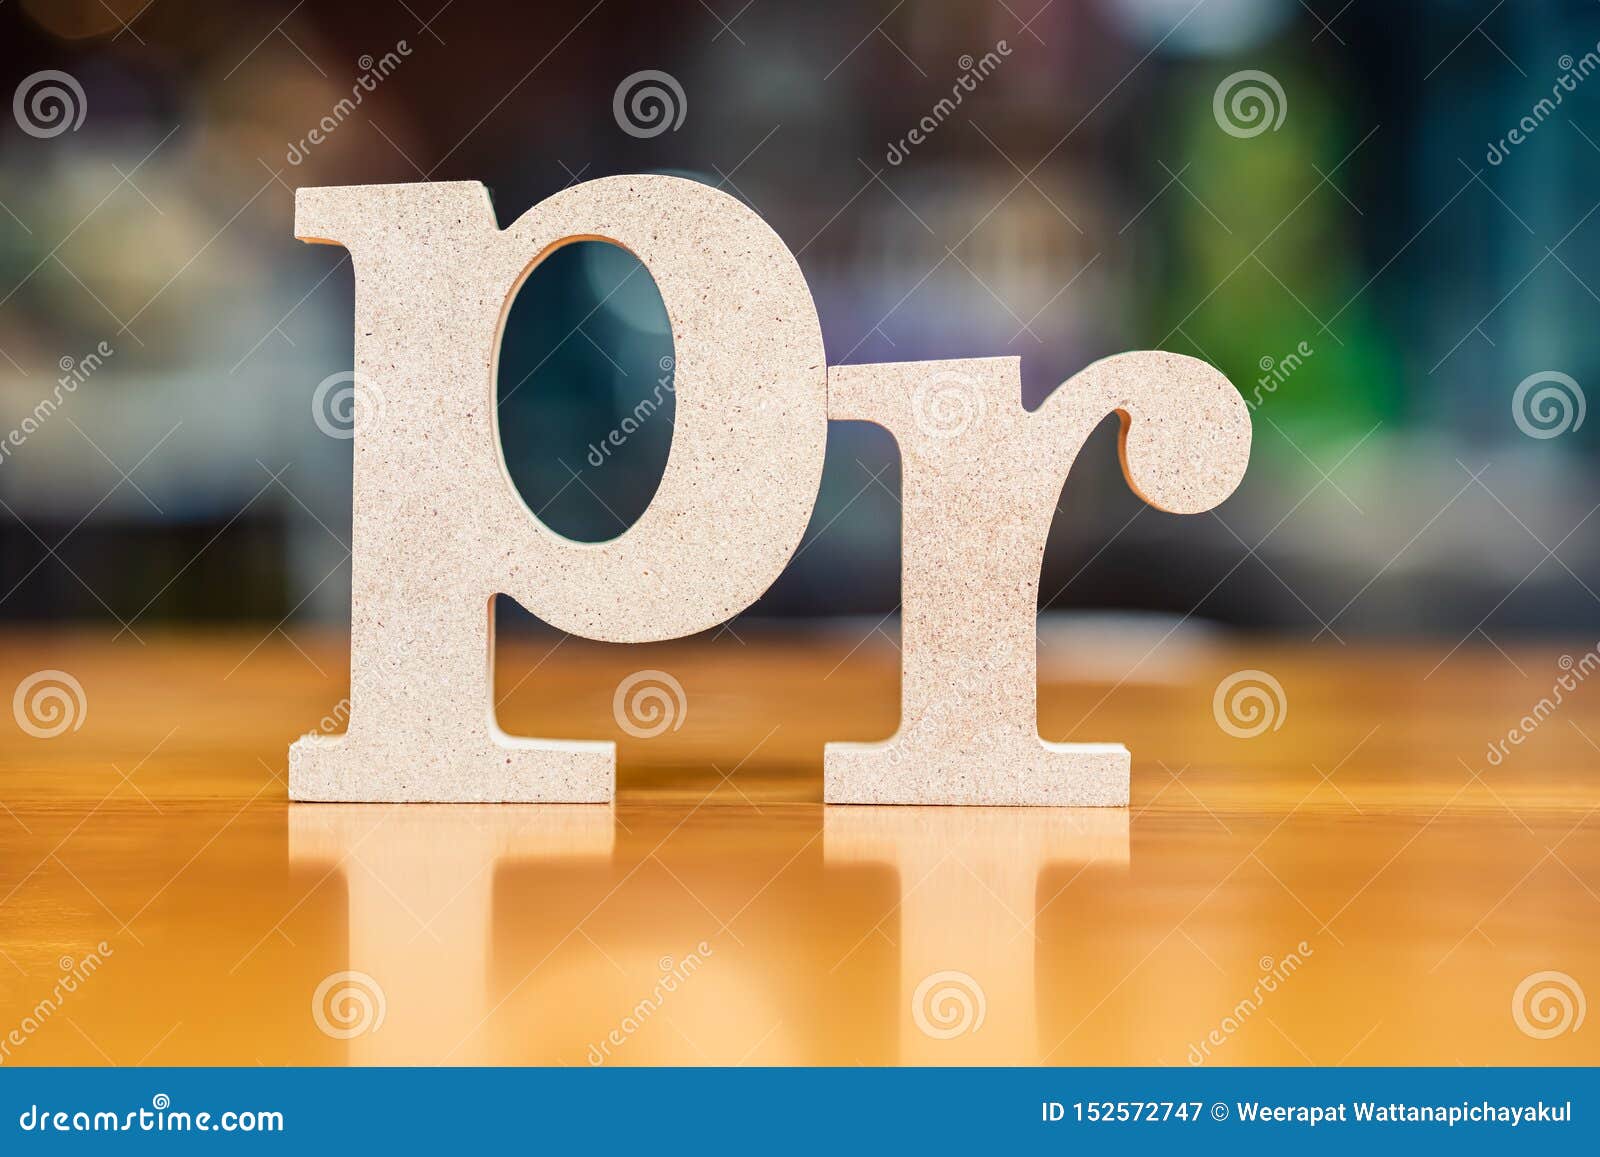 pr alphabet on blur background public relations